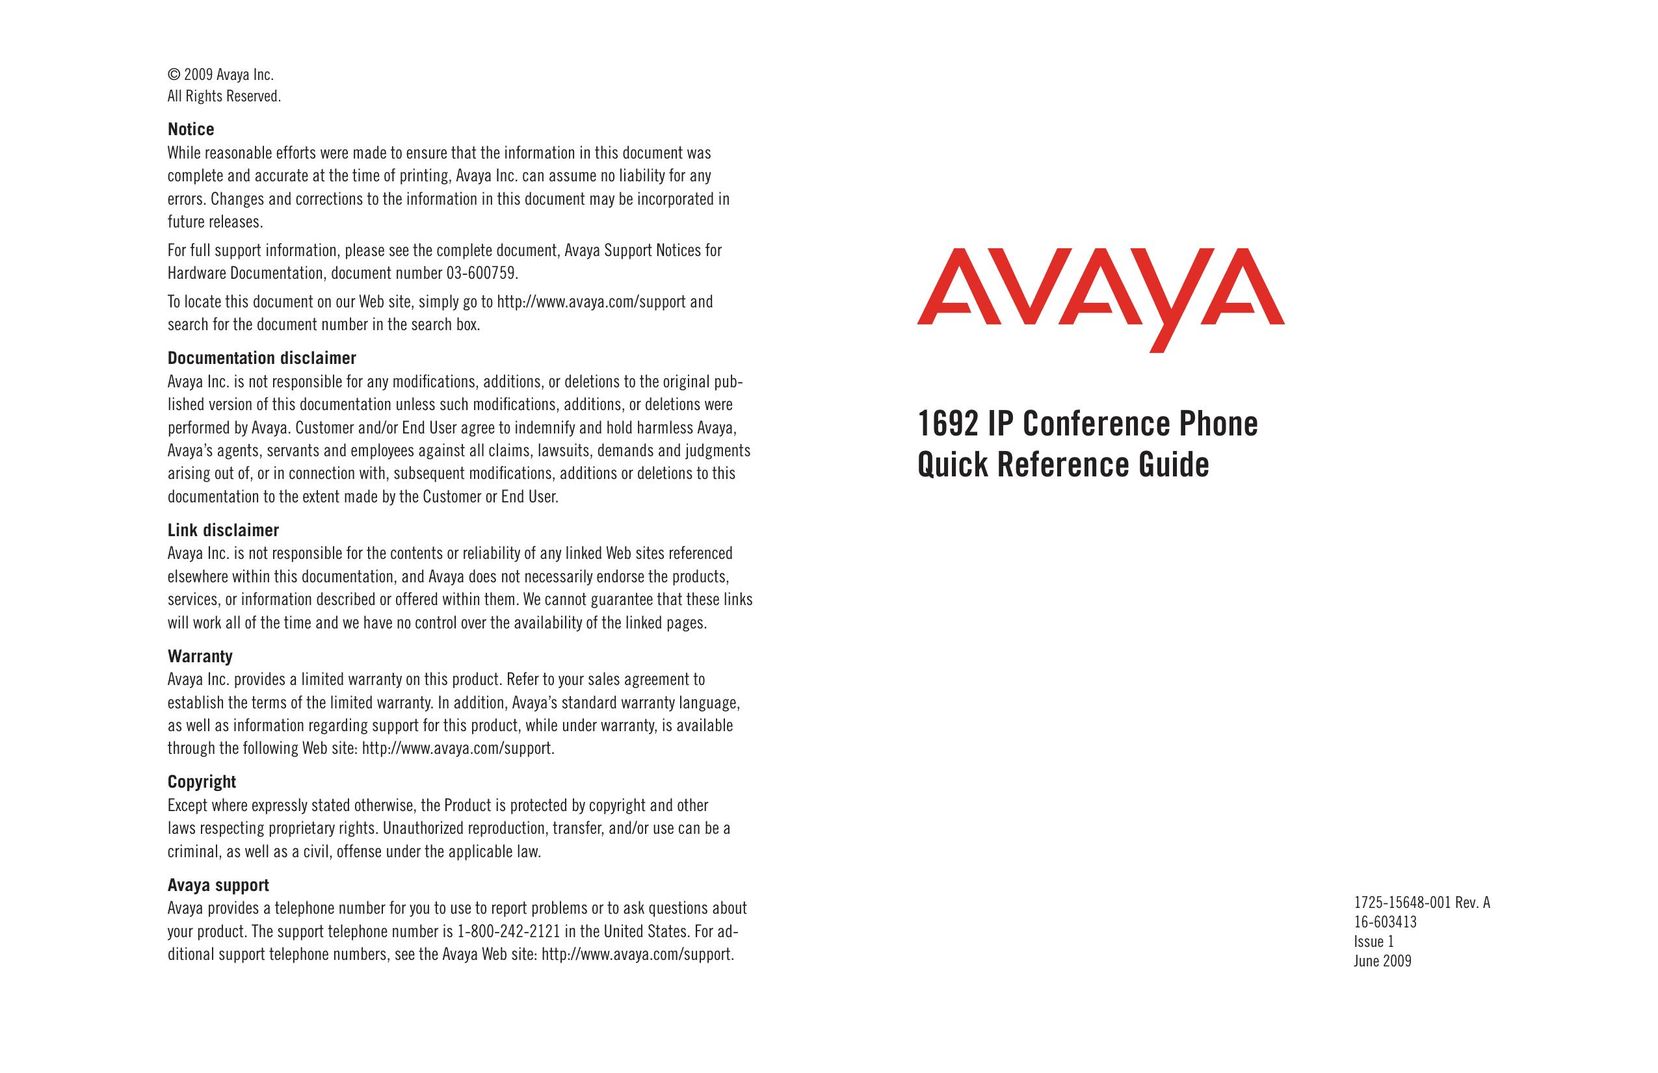 Avaya 16-603413 Conference Phone User Manual